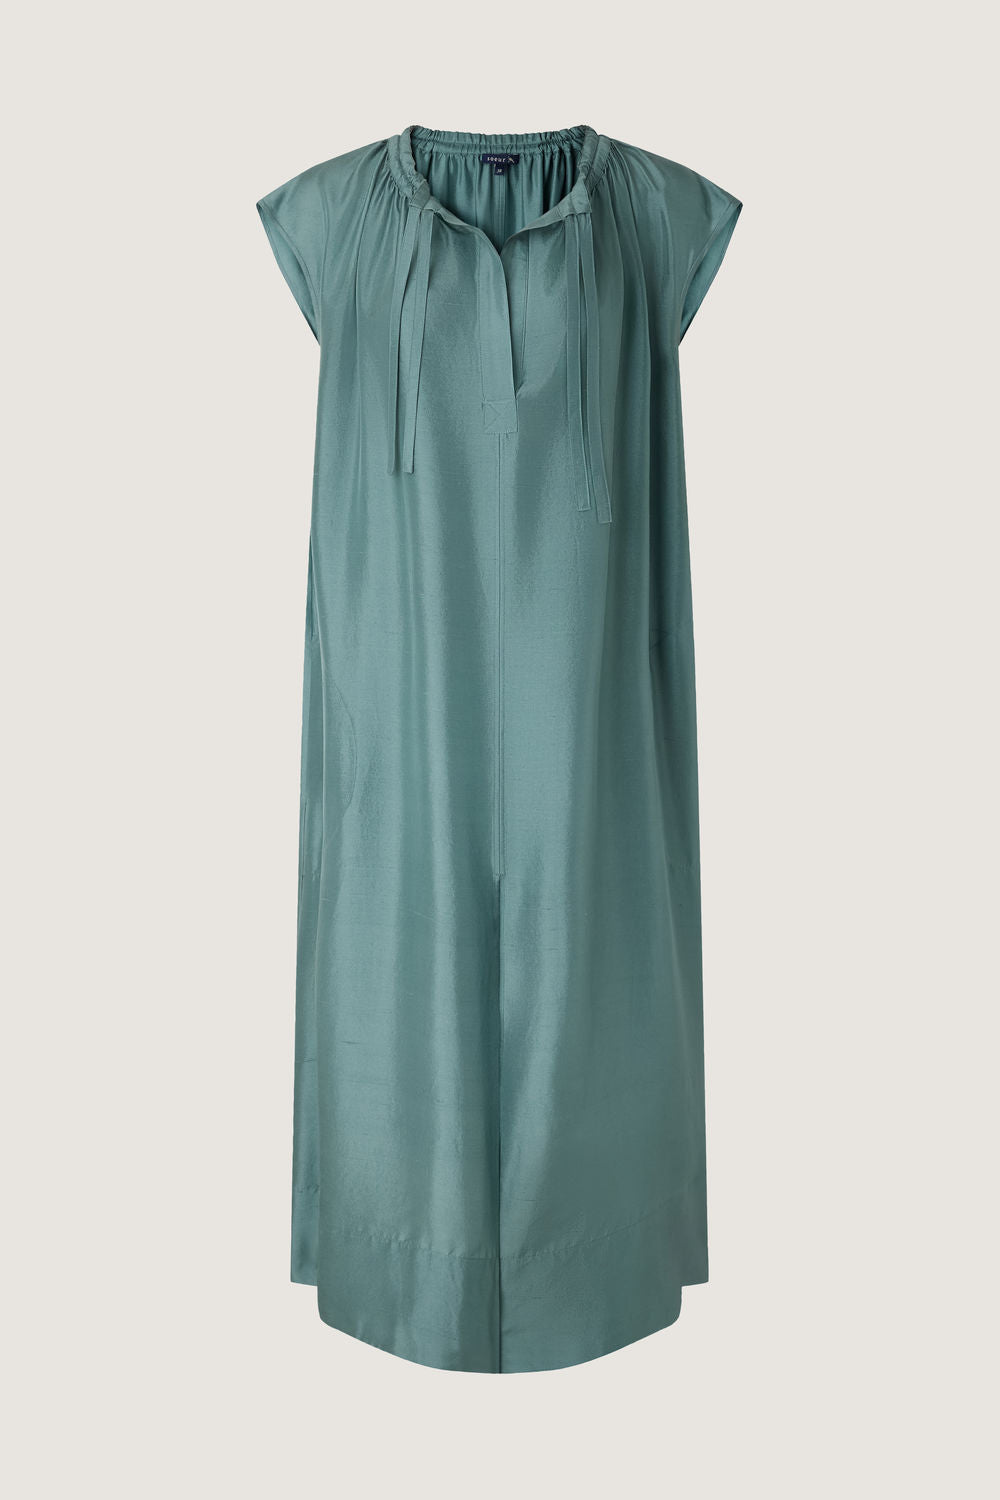 Dress Tamaris 1425 Vert-Canard